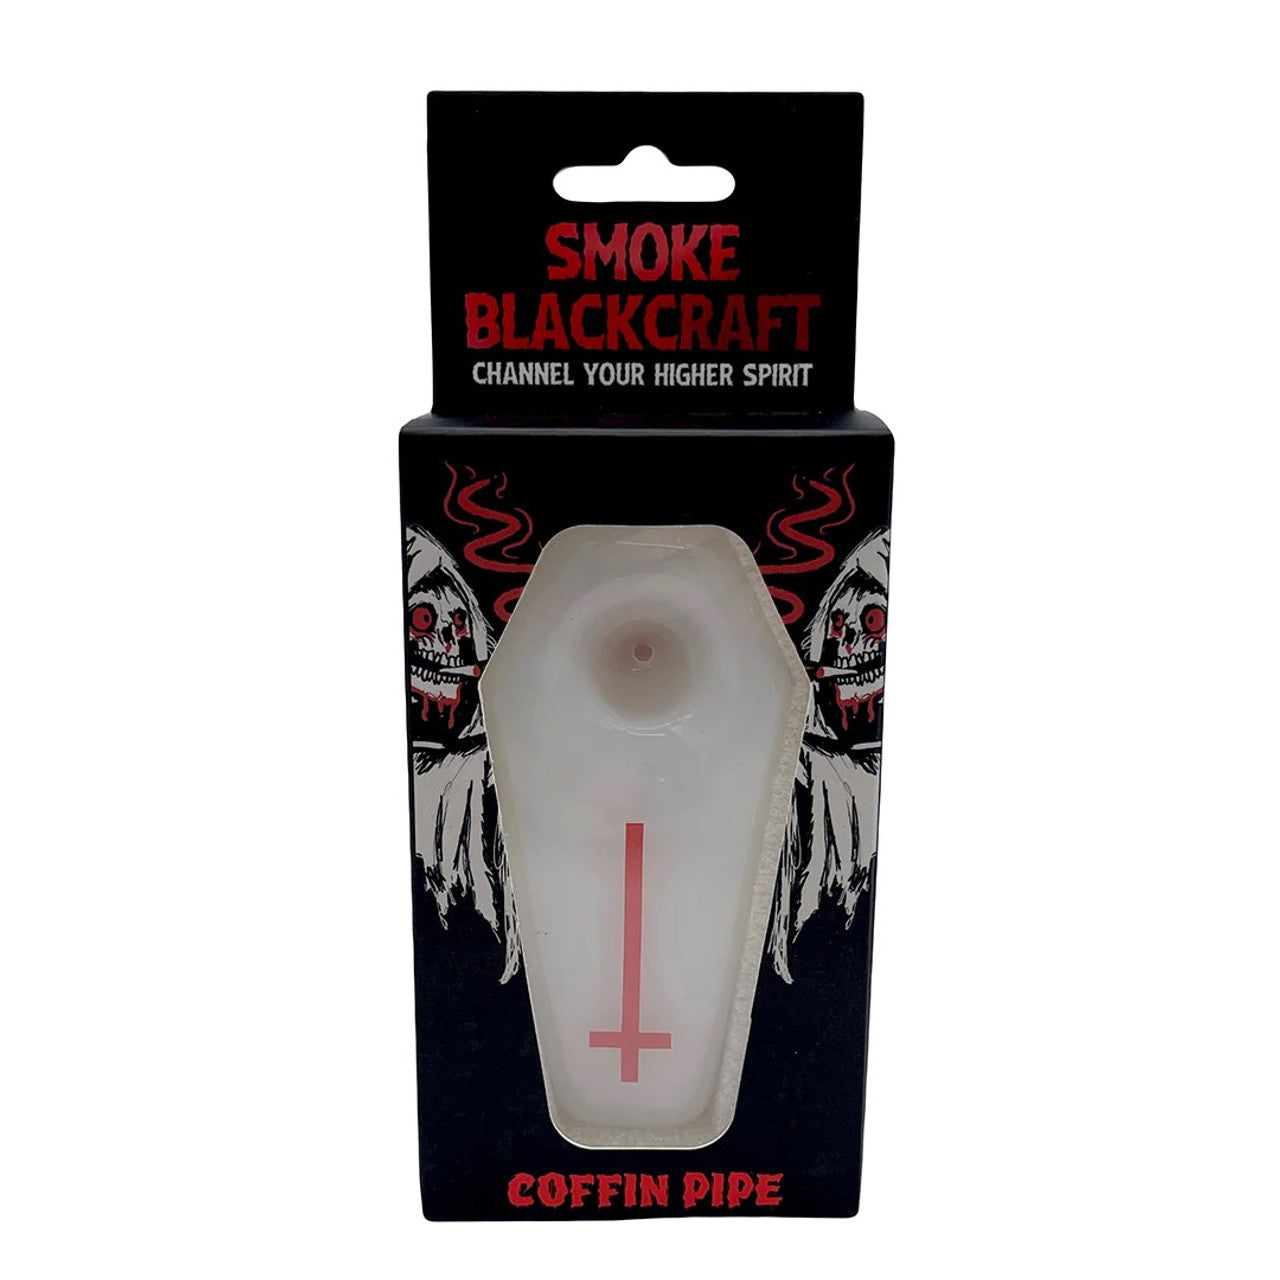 Smoke Blackcraft Coffin Pipe White Box